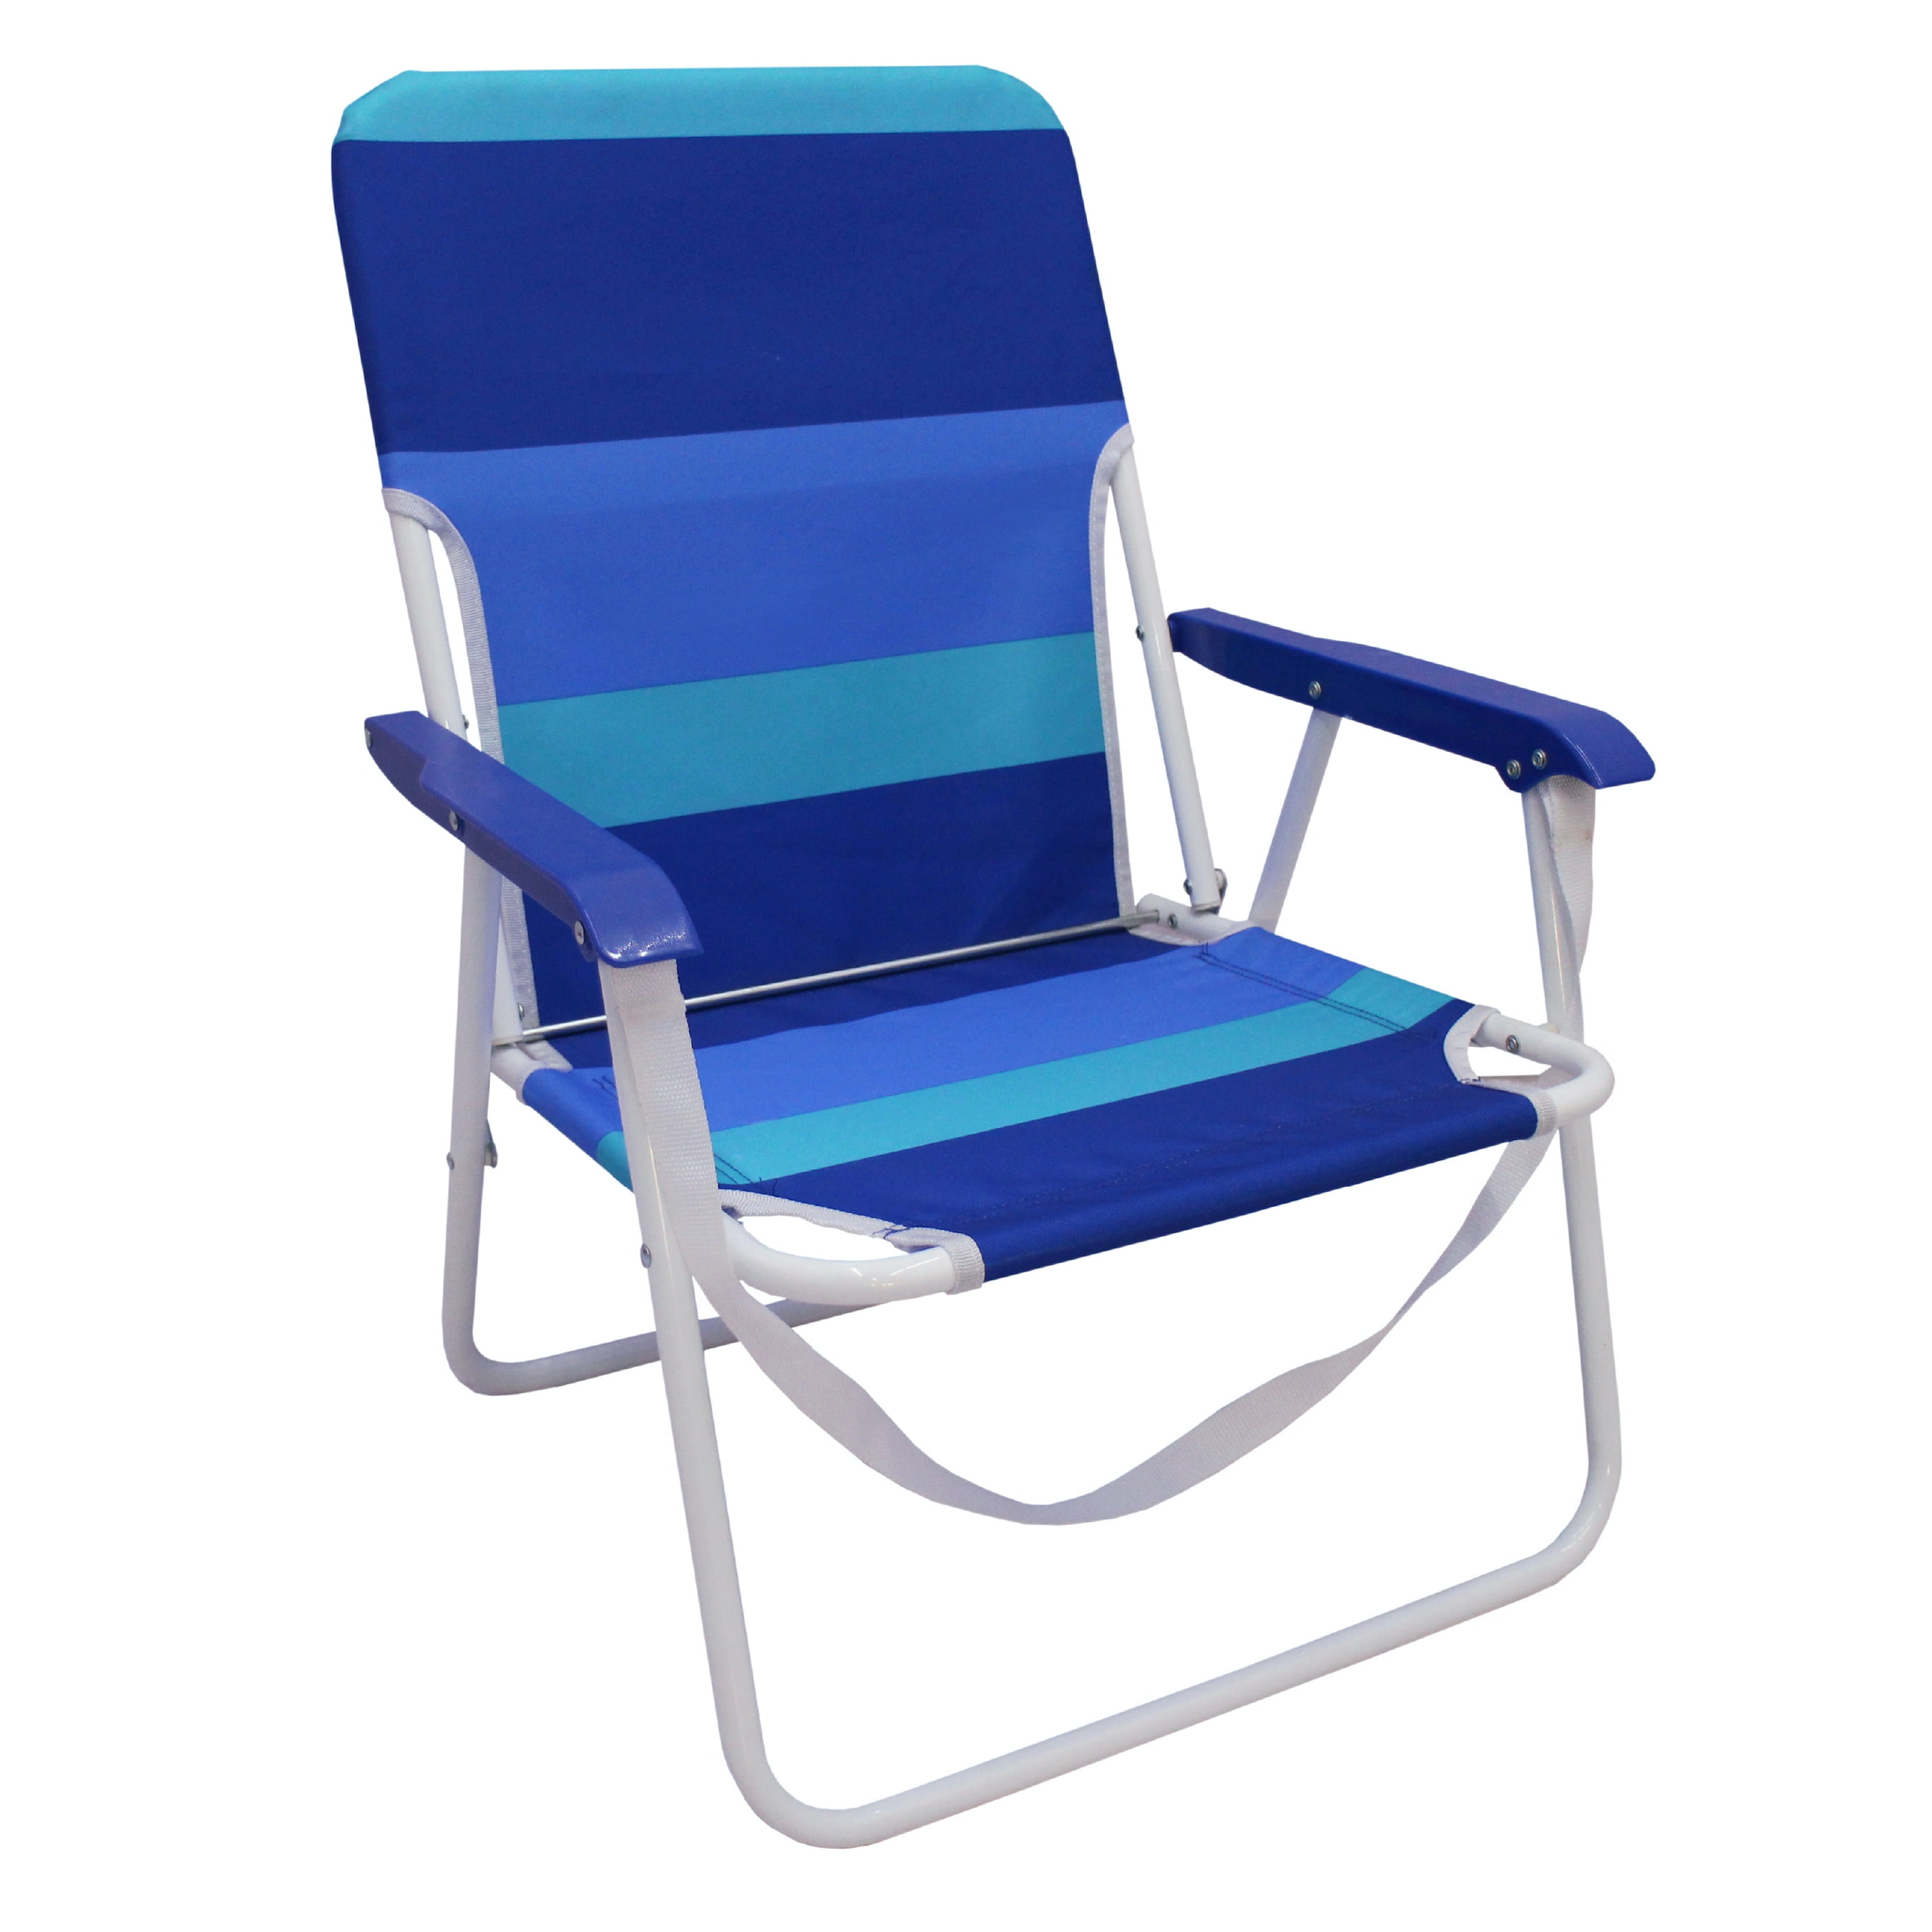  Modern Folding Beach Chair for Simple Design